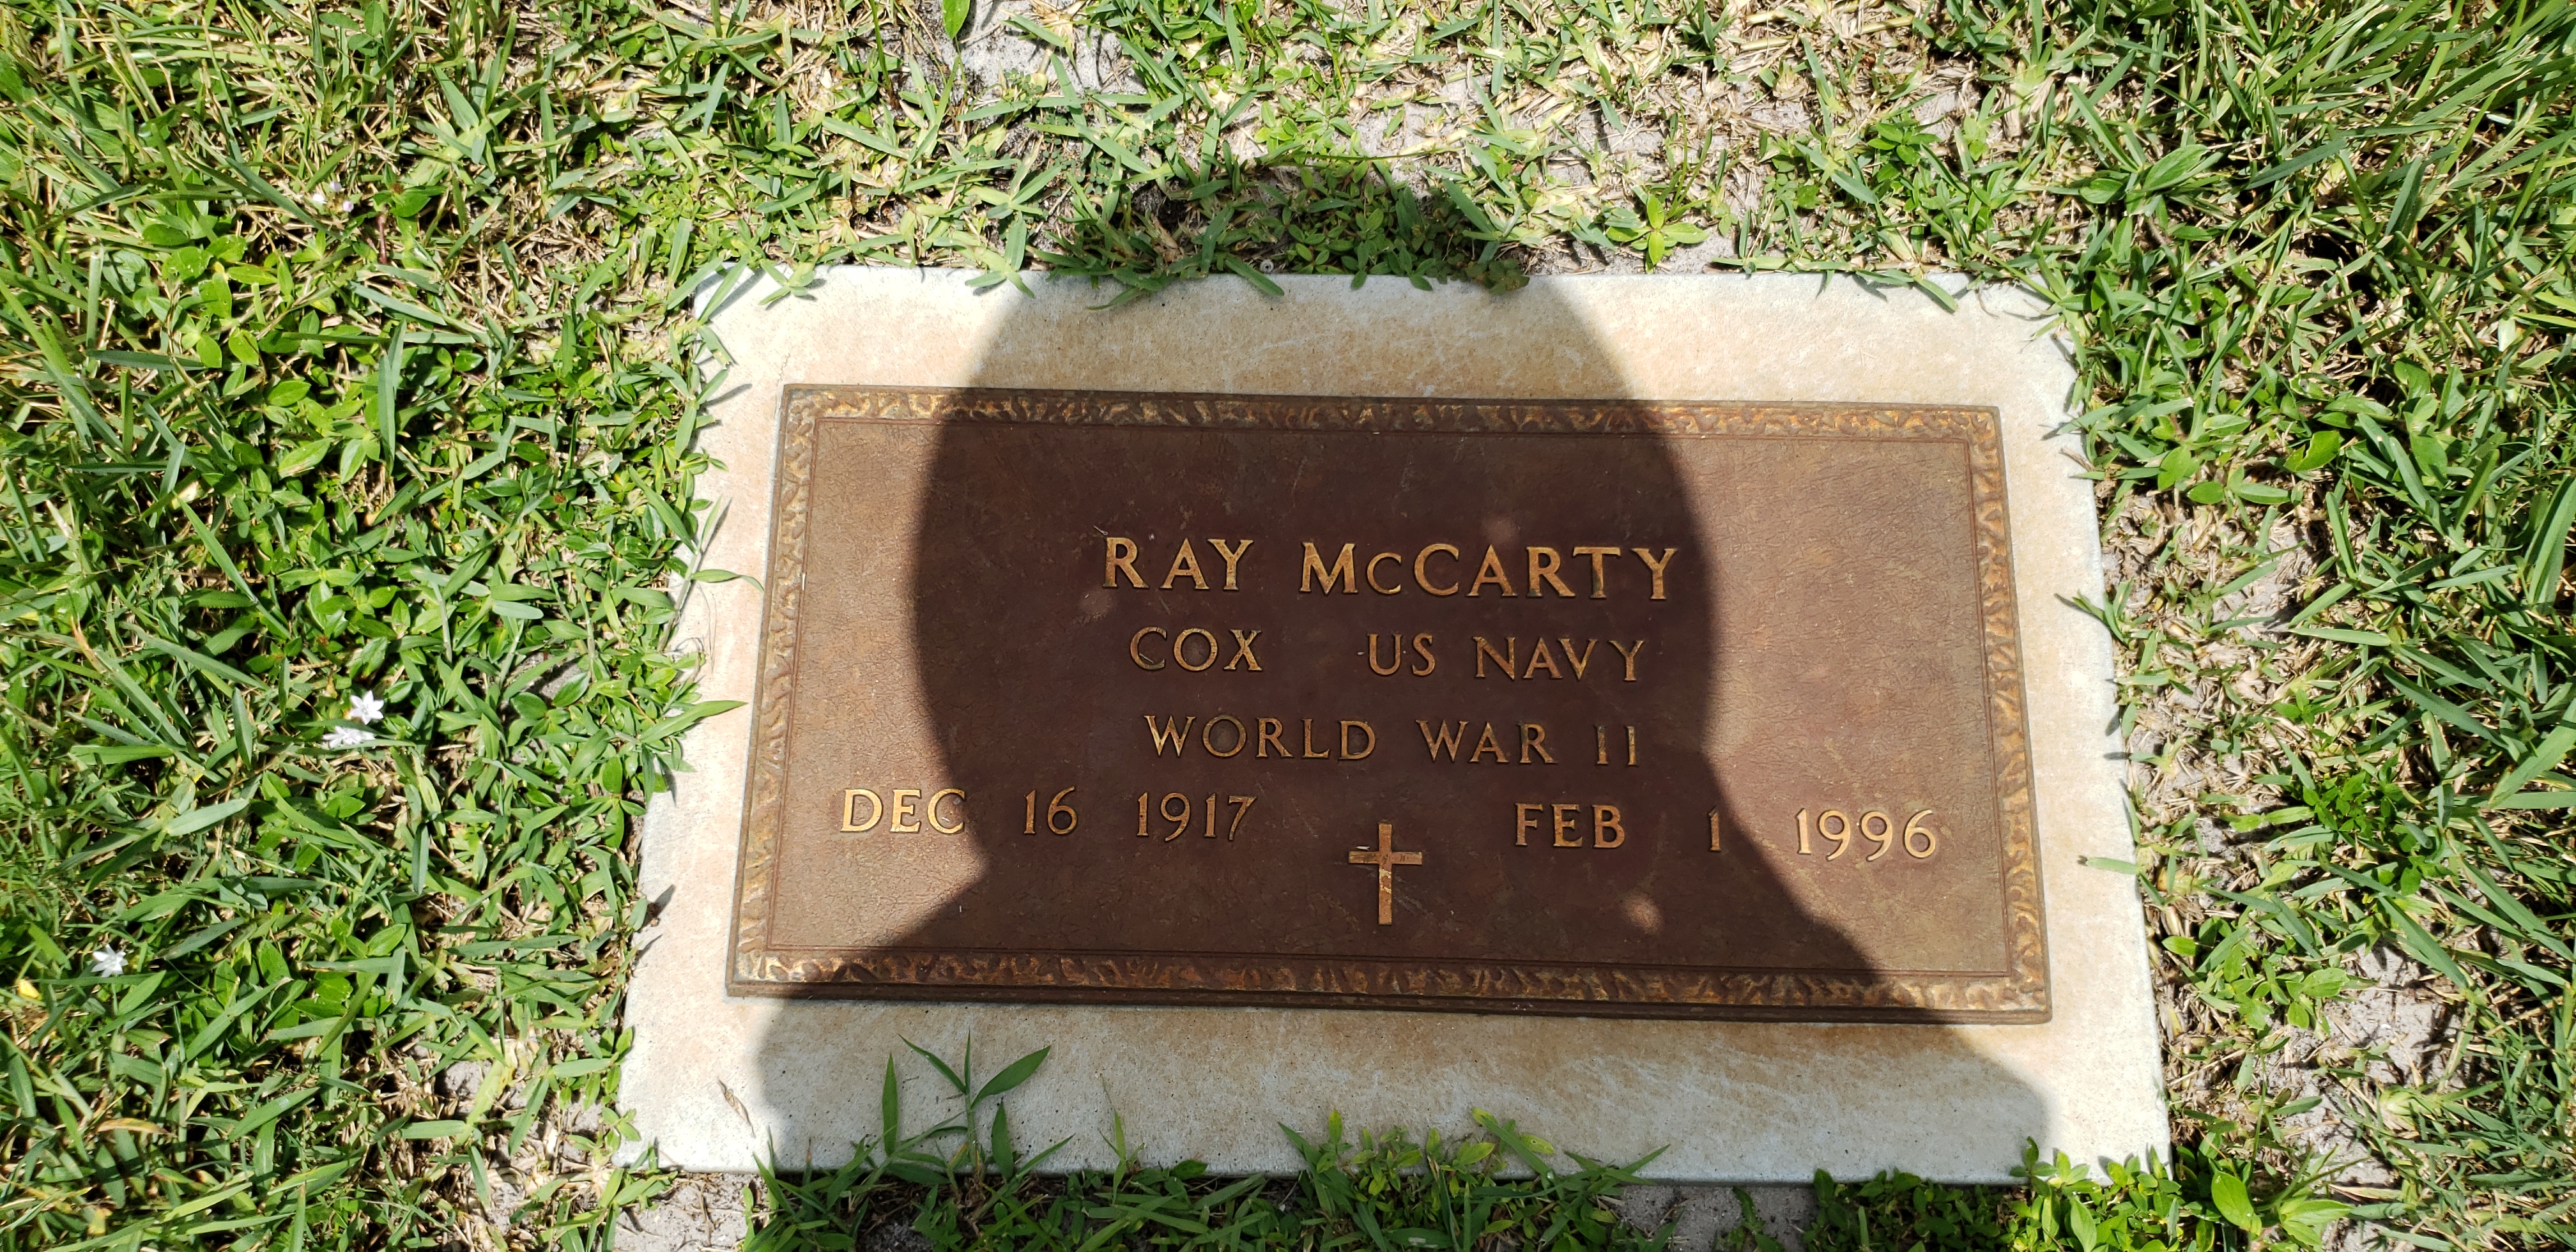 Ray McCarty